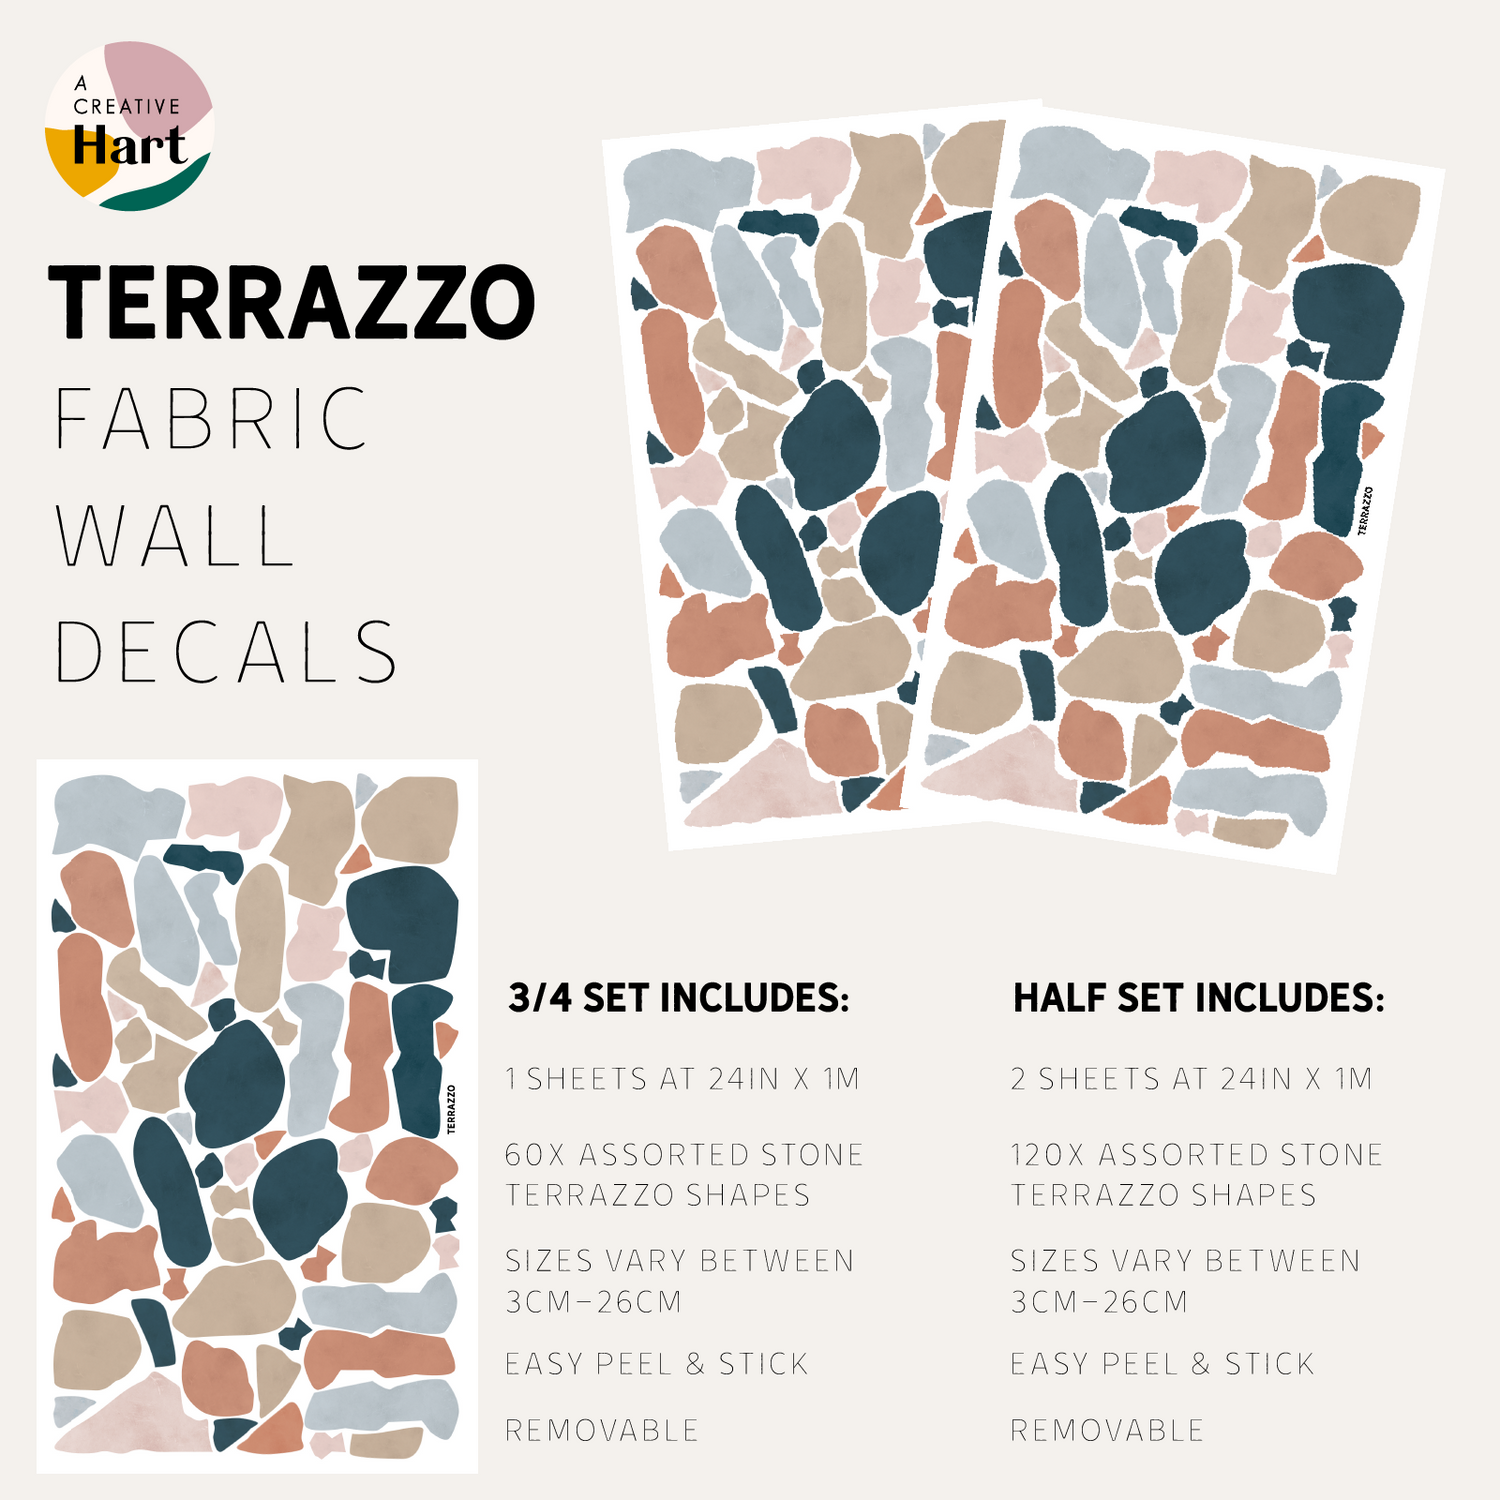 Terrazzo Wall Decals - A Creative Hart